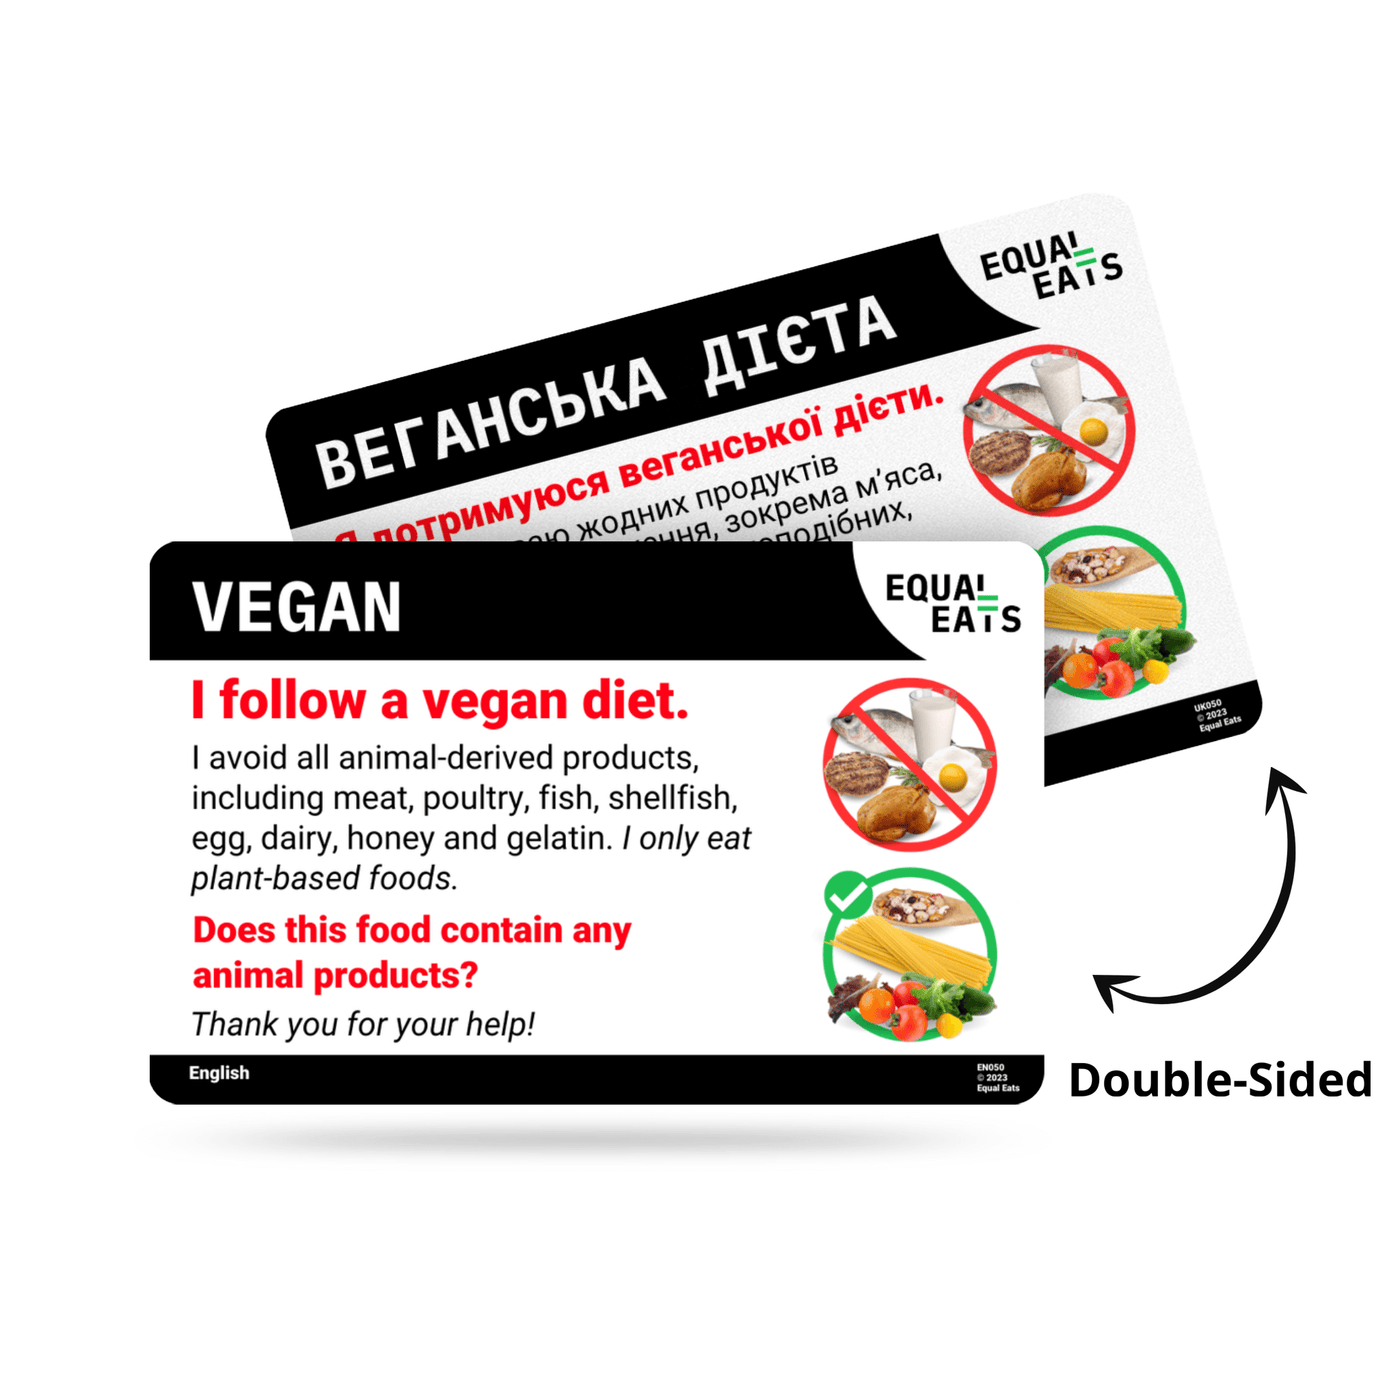 Romanian Vegan Card